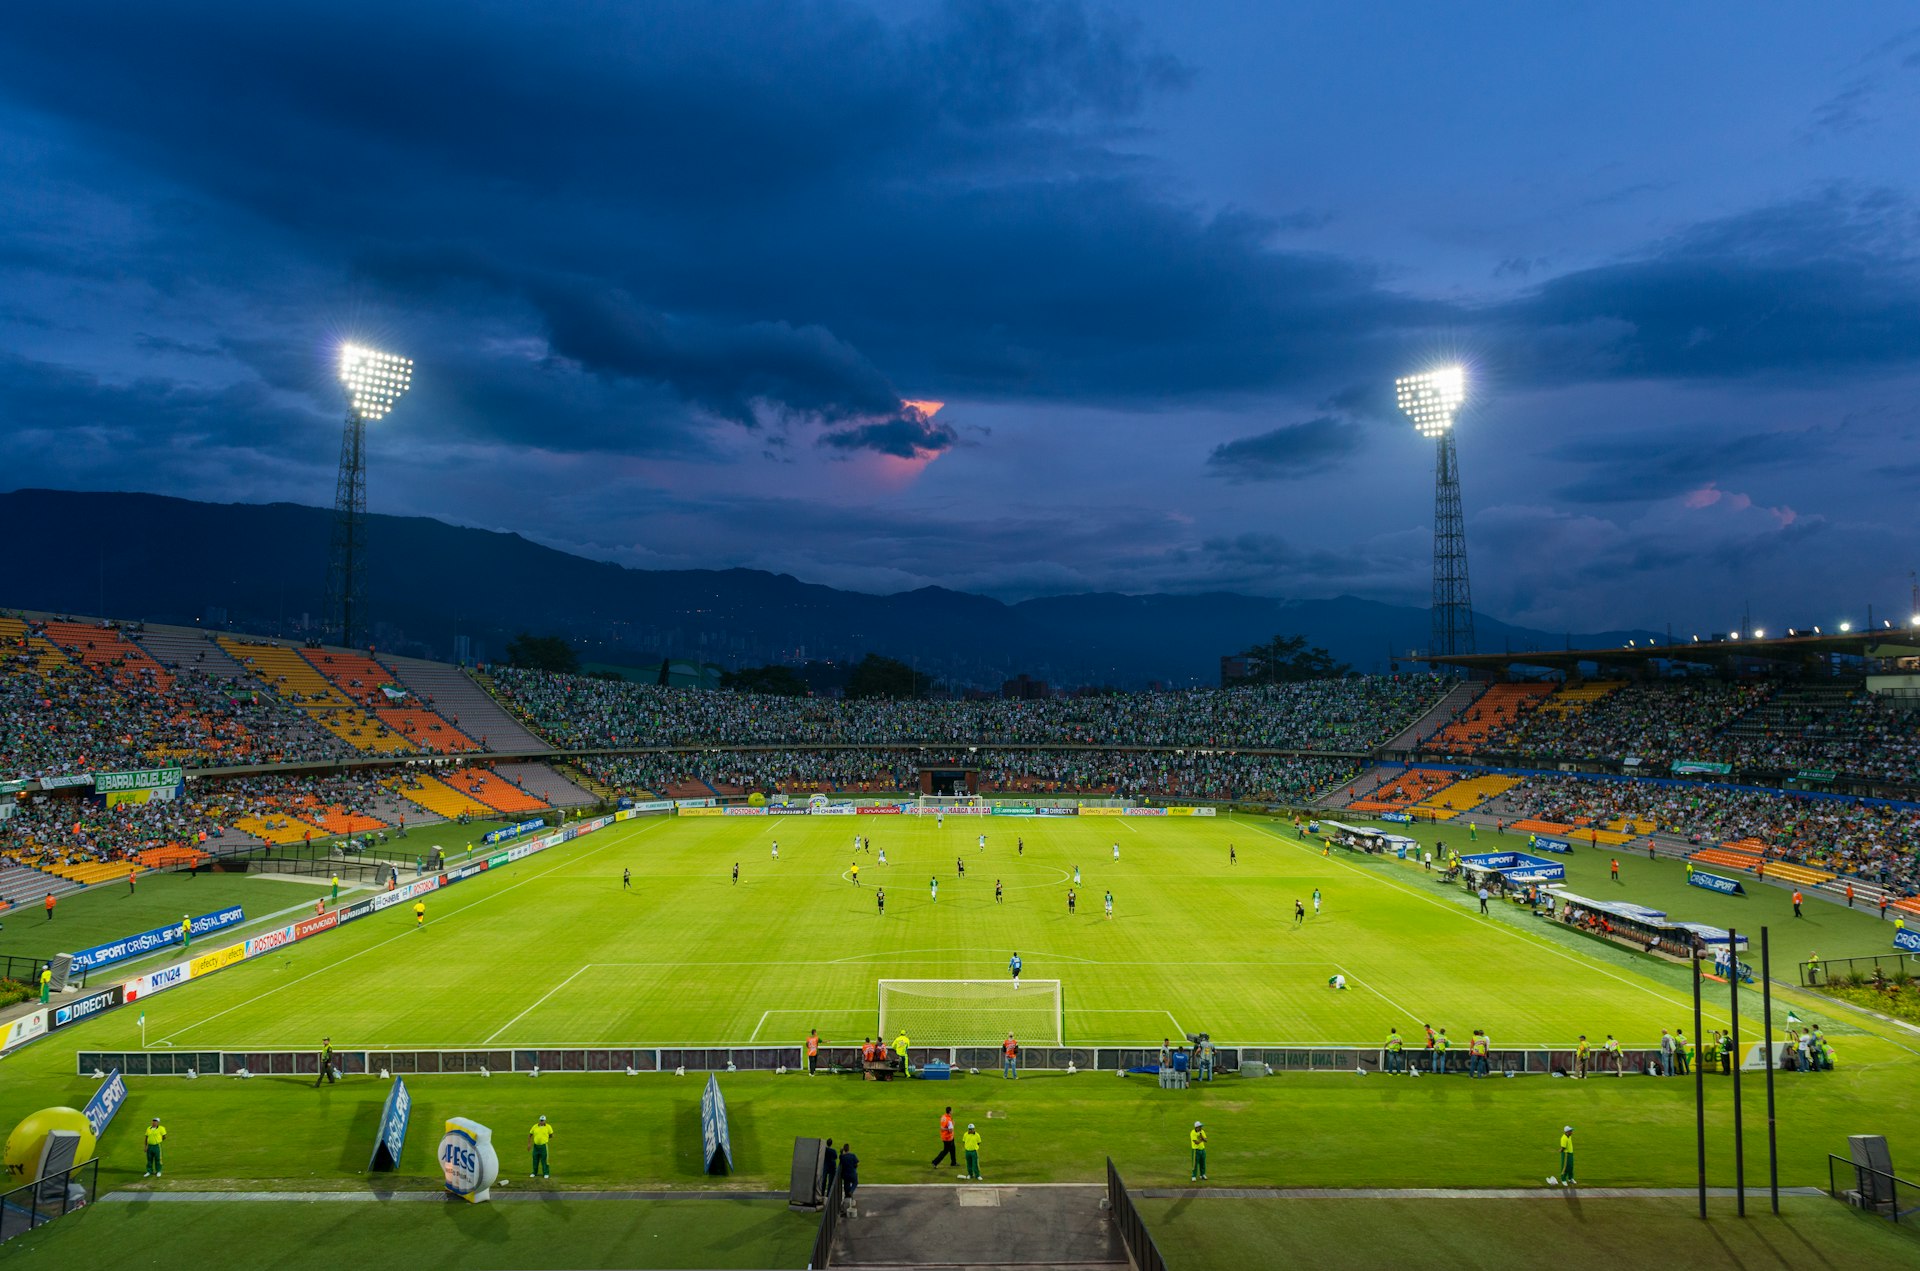 An aerial view of the soccer field at Estadio Girardot in Medellín